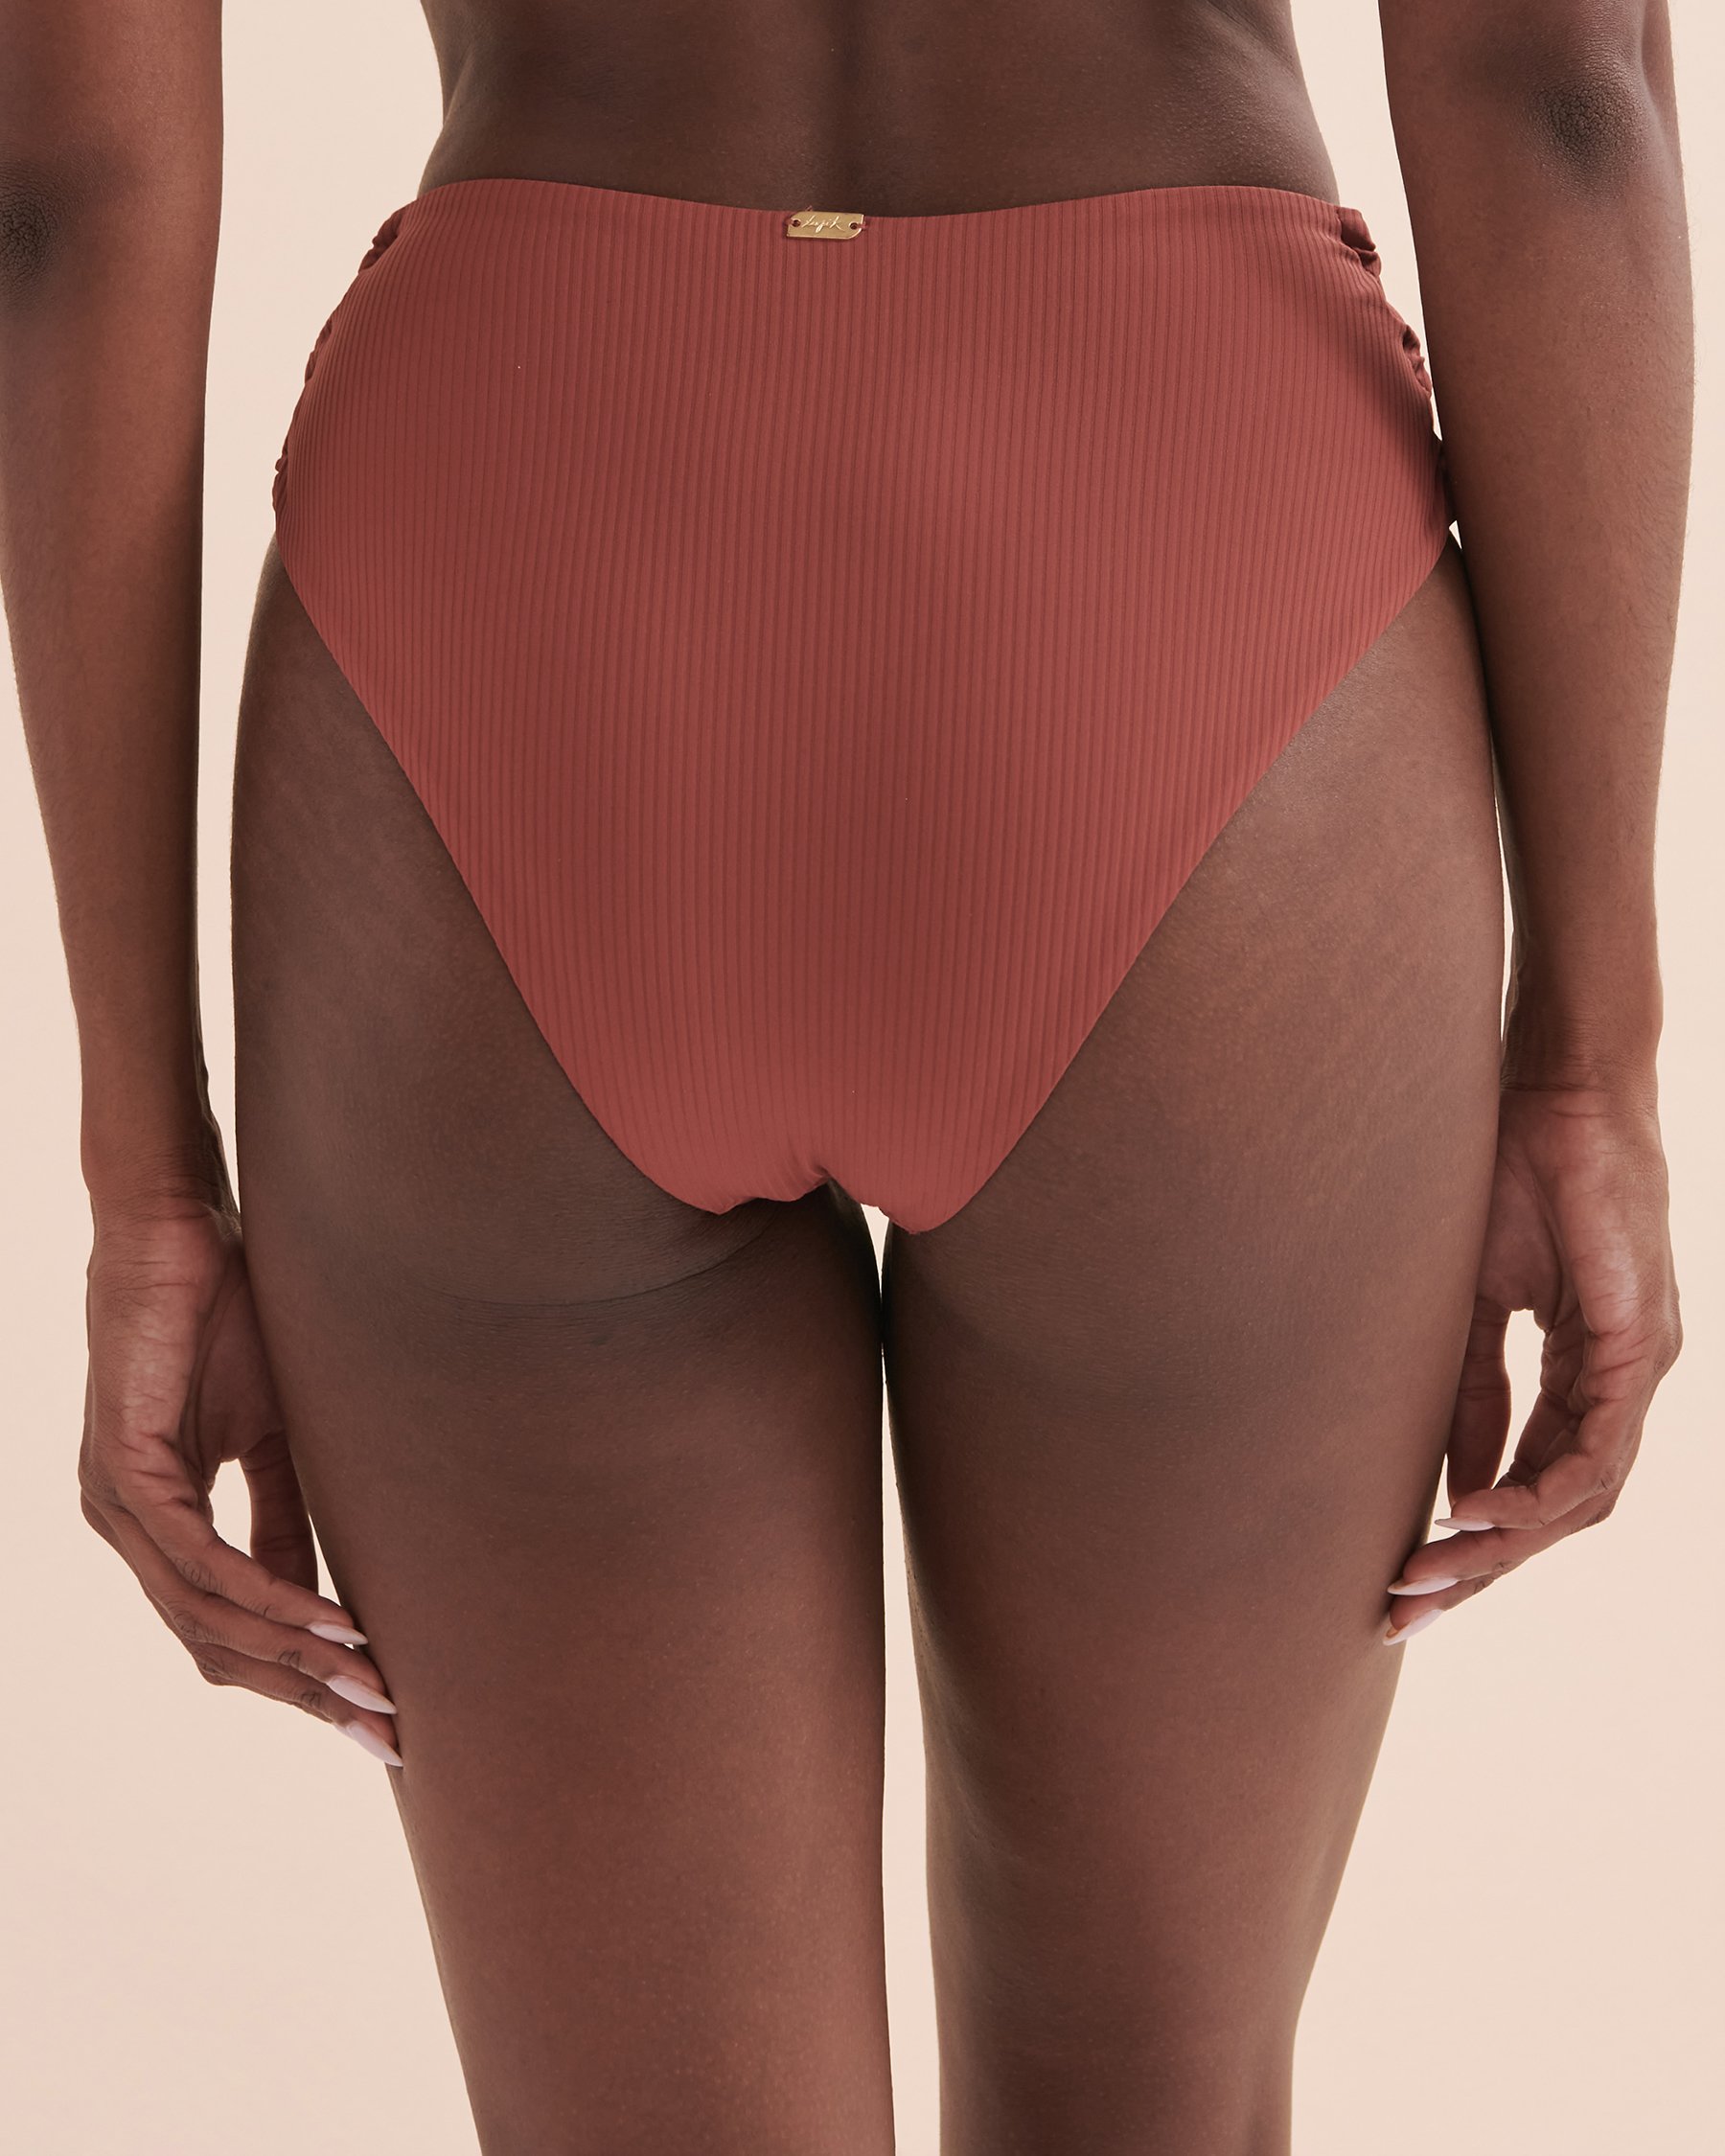 TROPIK Textured Side Tie High Waist Bikini Bottom Brown 01300236 - View6